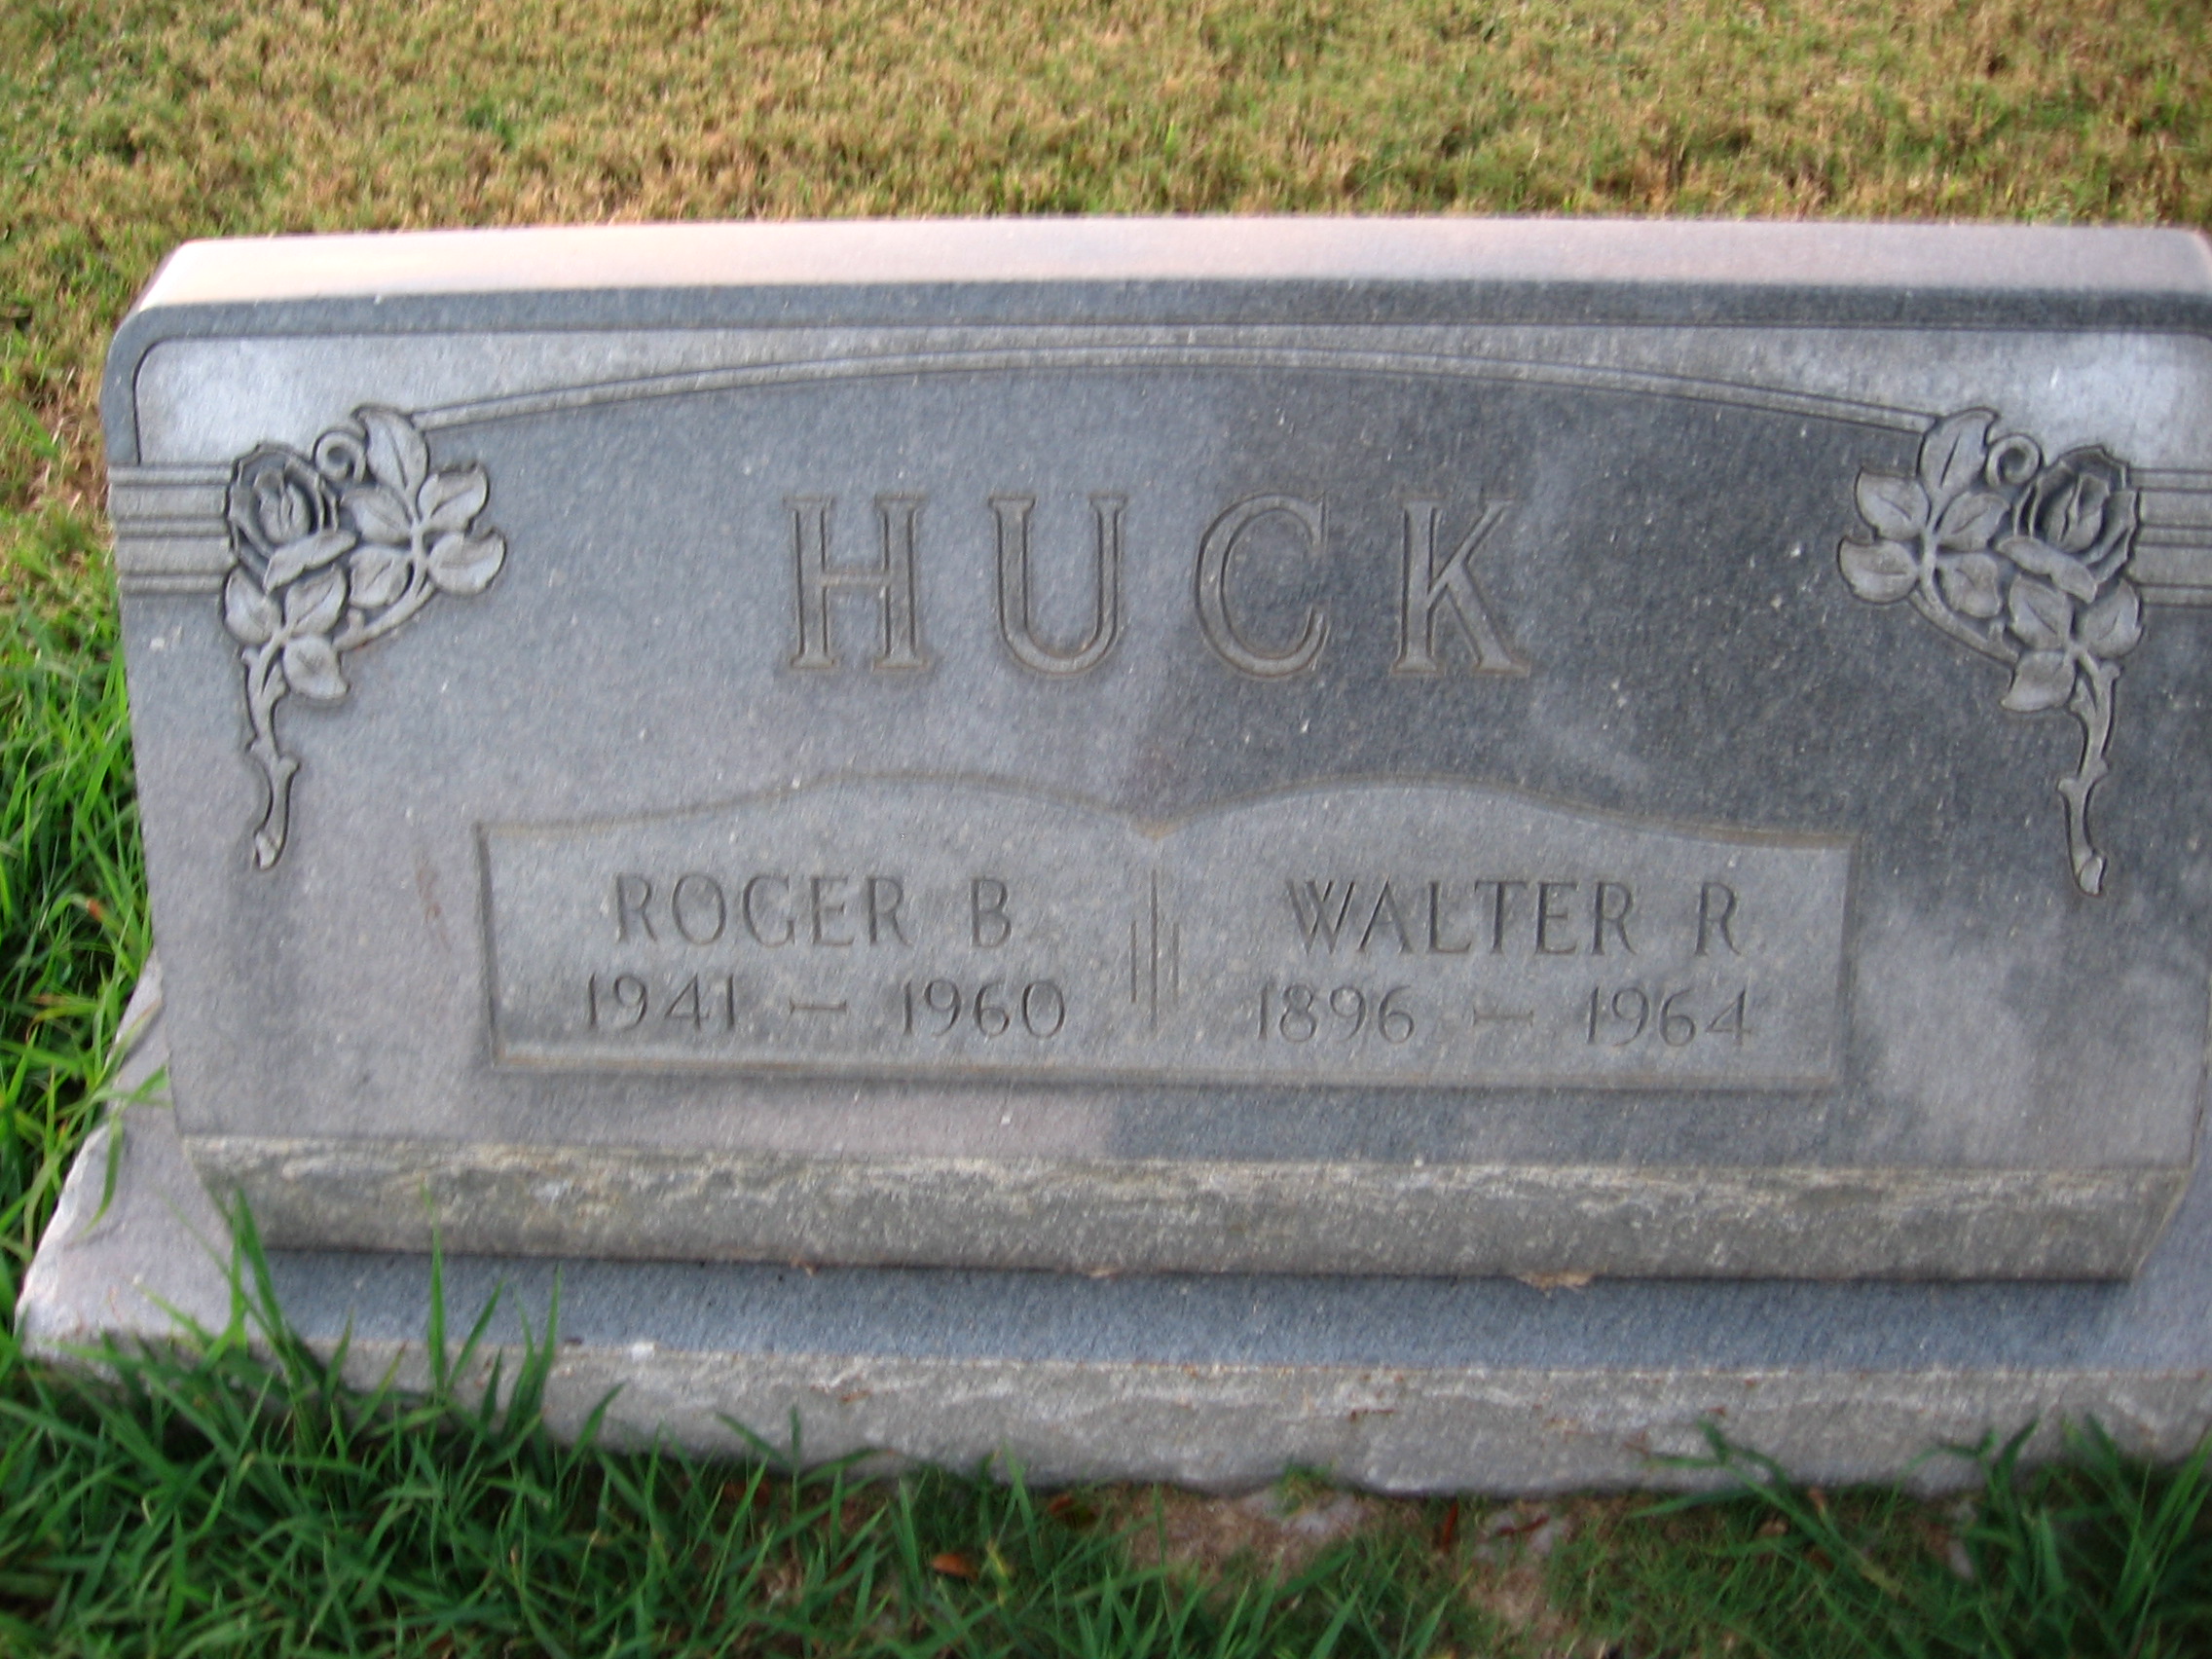 Roger B Huck